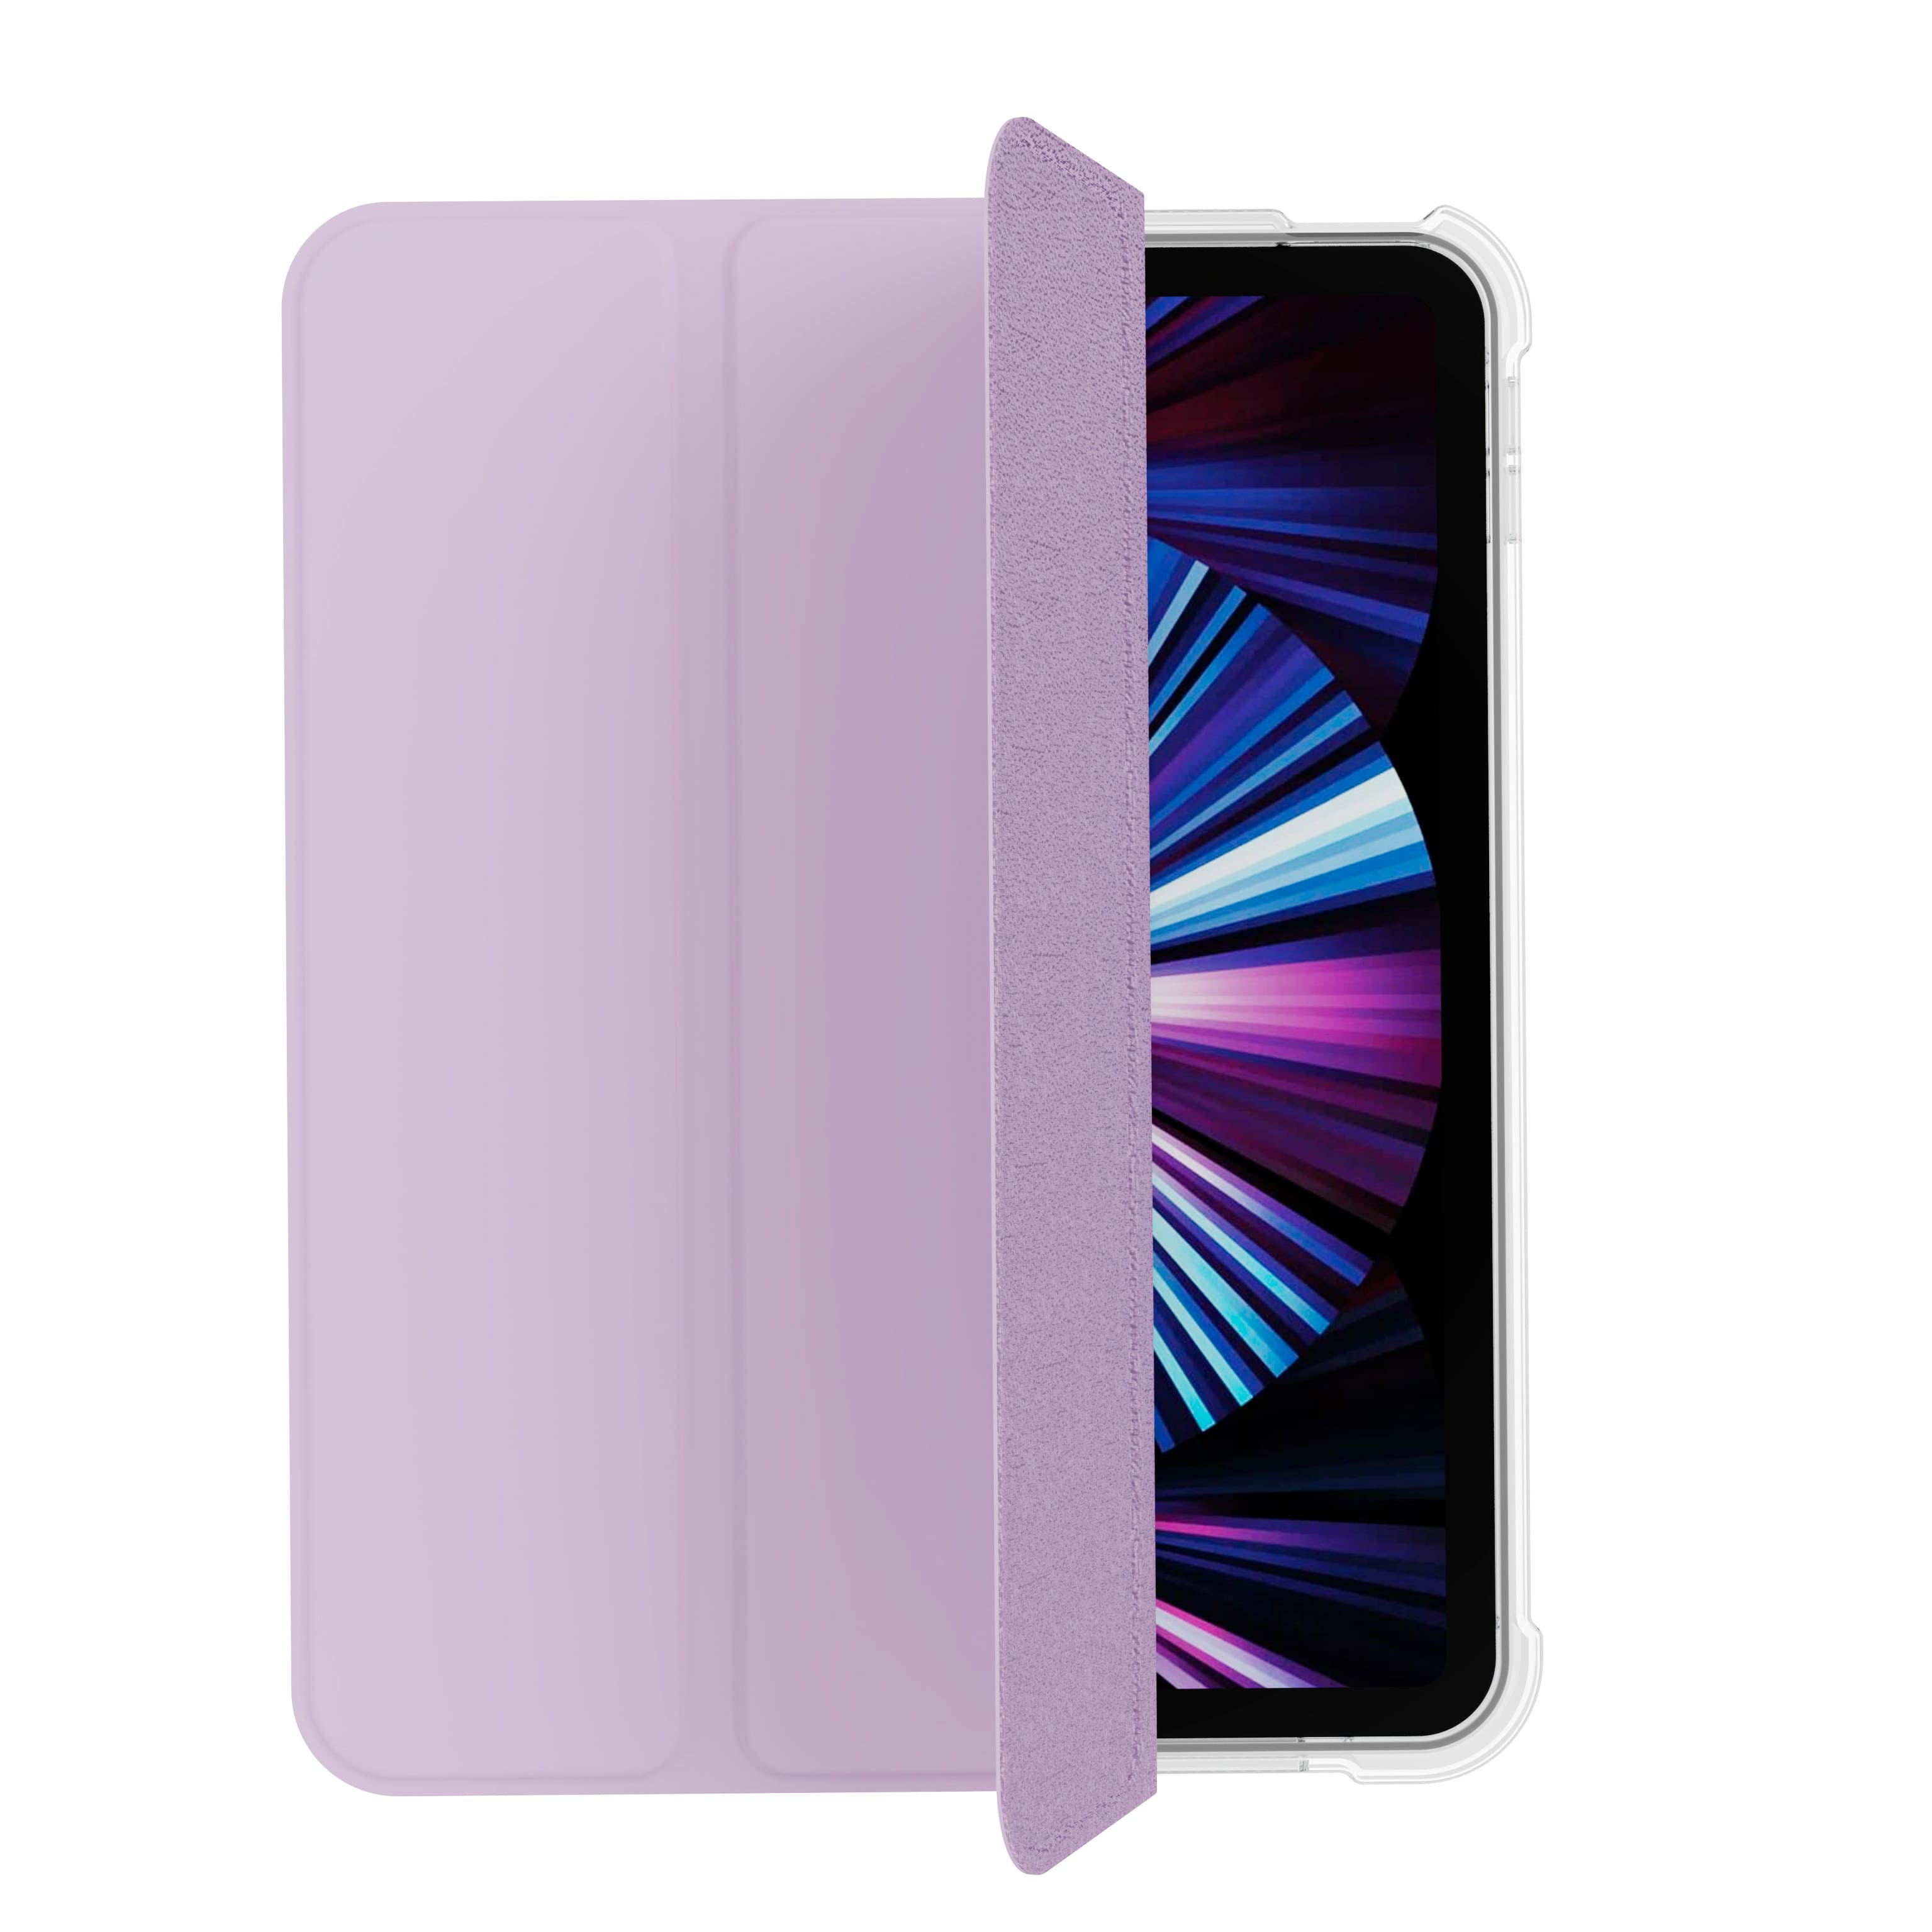 Фото — Чехол для планшета vlp для iPad mini 6 2021 Dual Folio, фиолетовый